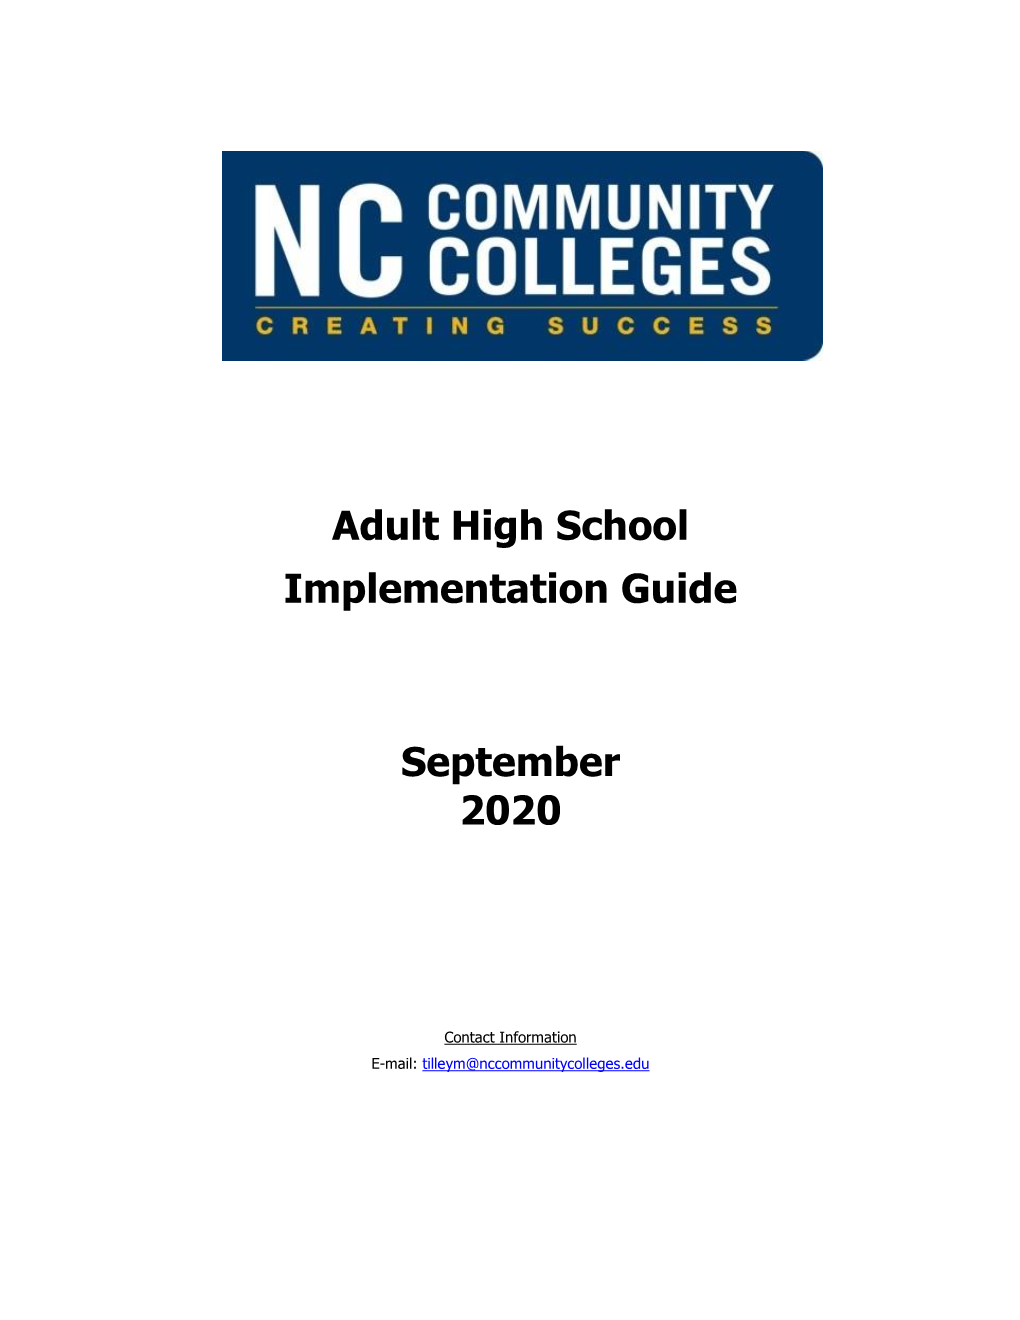 Adult High School Implementation Guide September 2020